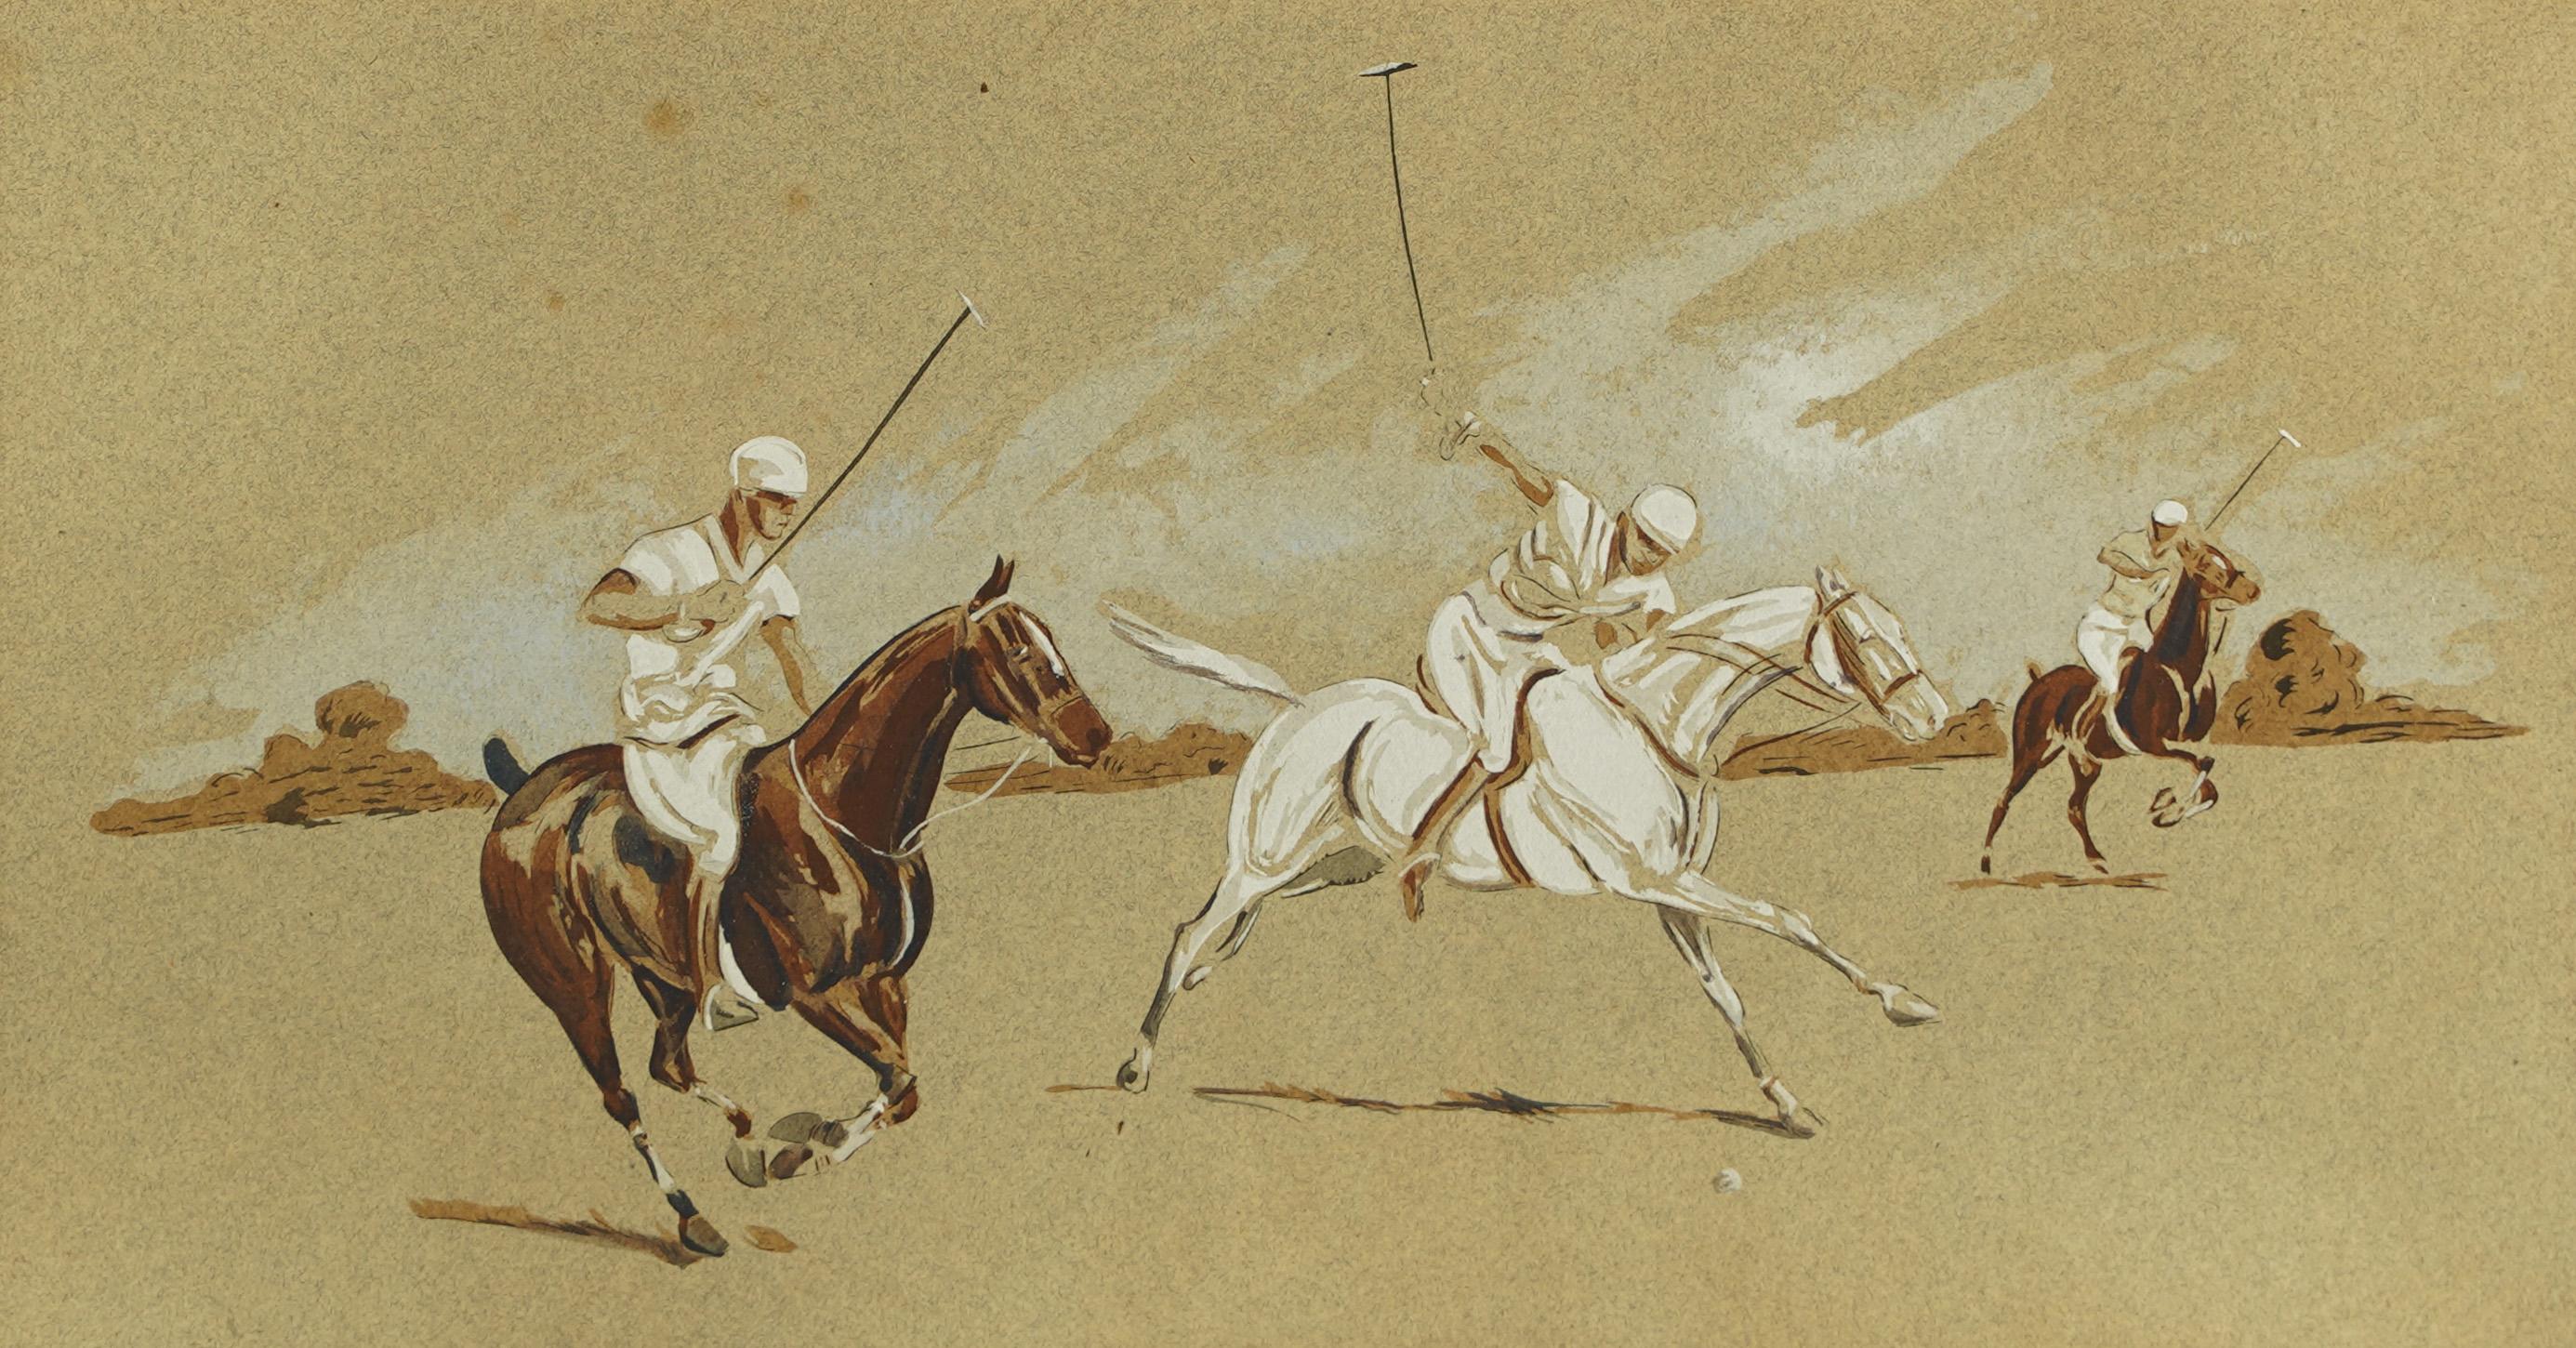 Antique American School Polo Players Horse Equine Landscape Original Painting 1